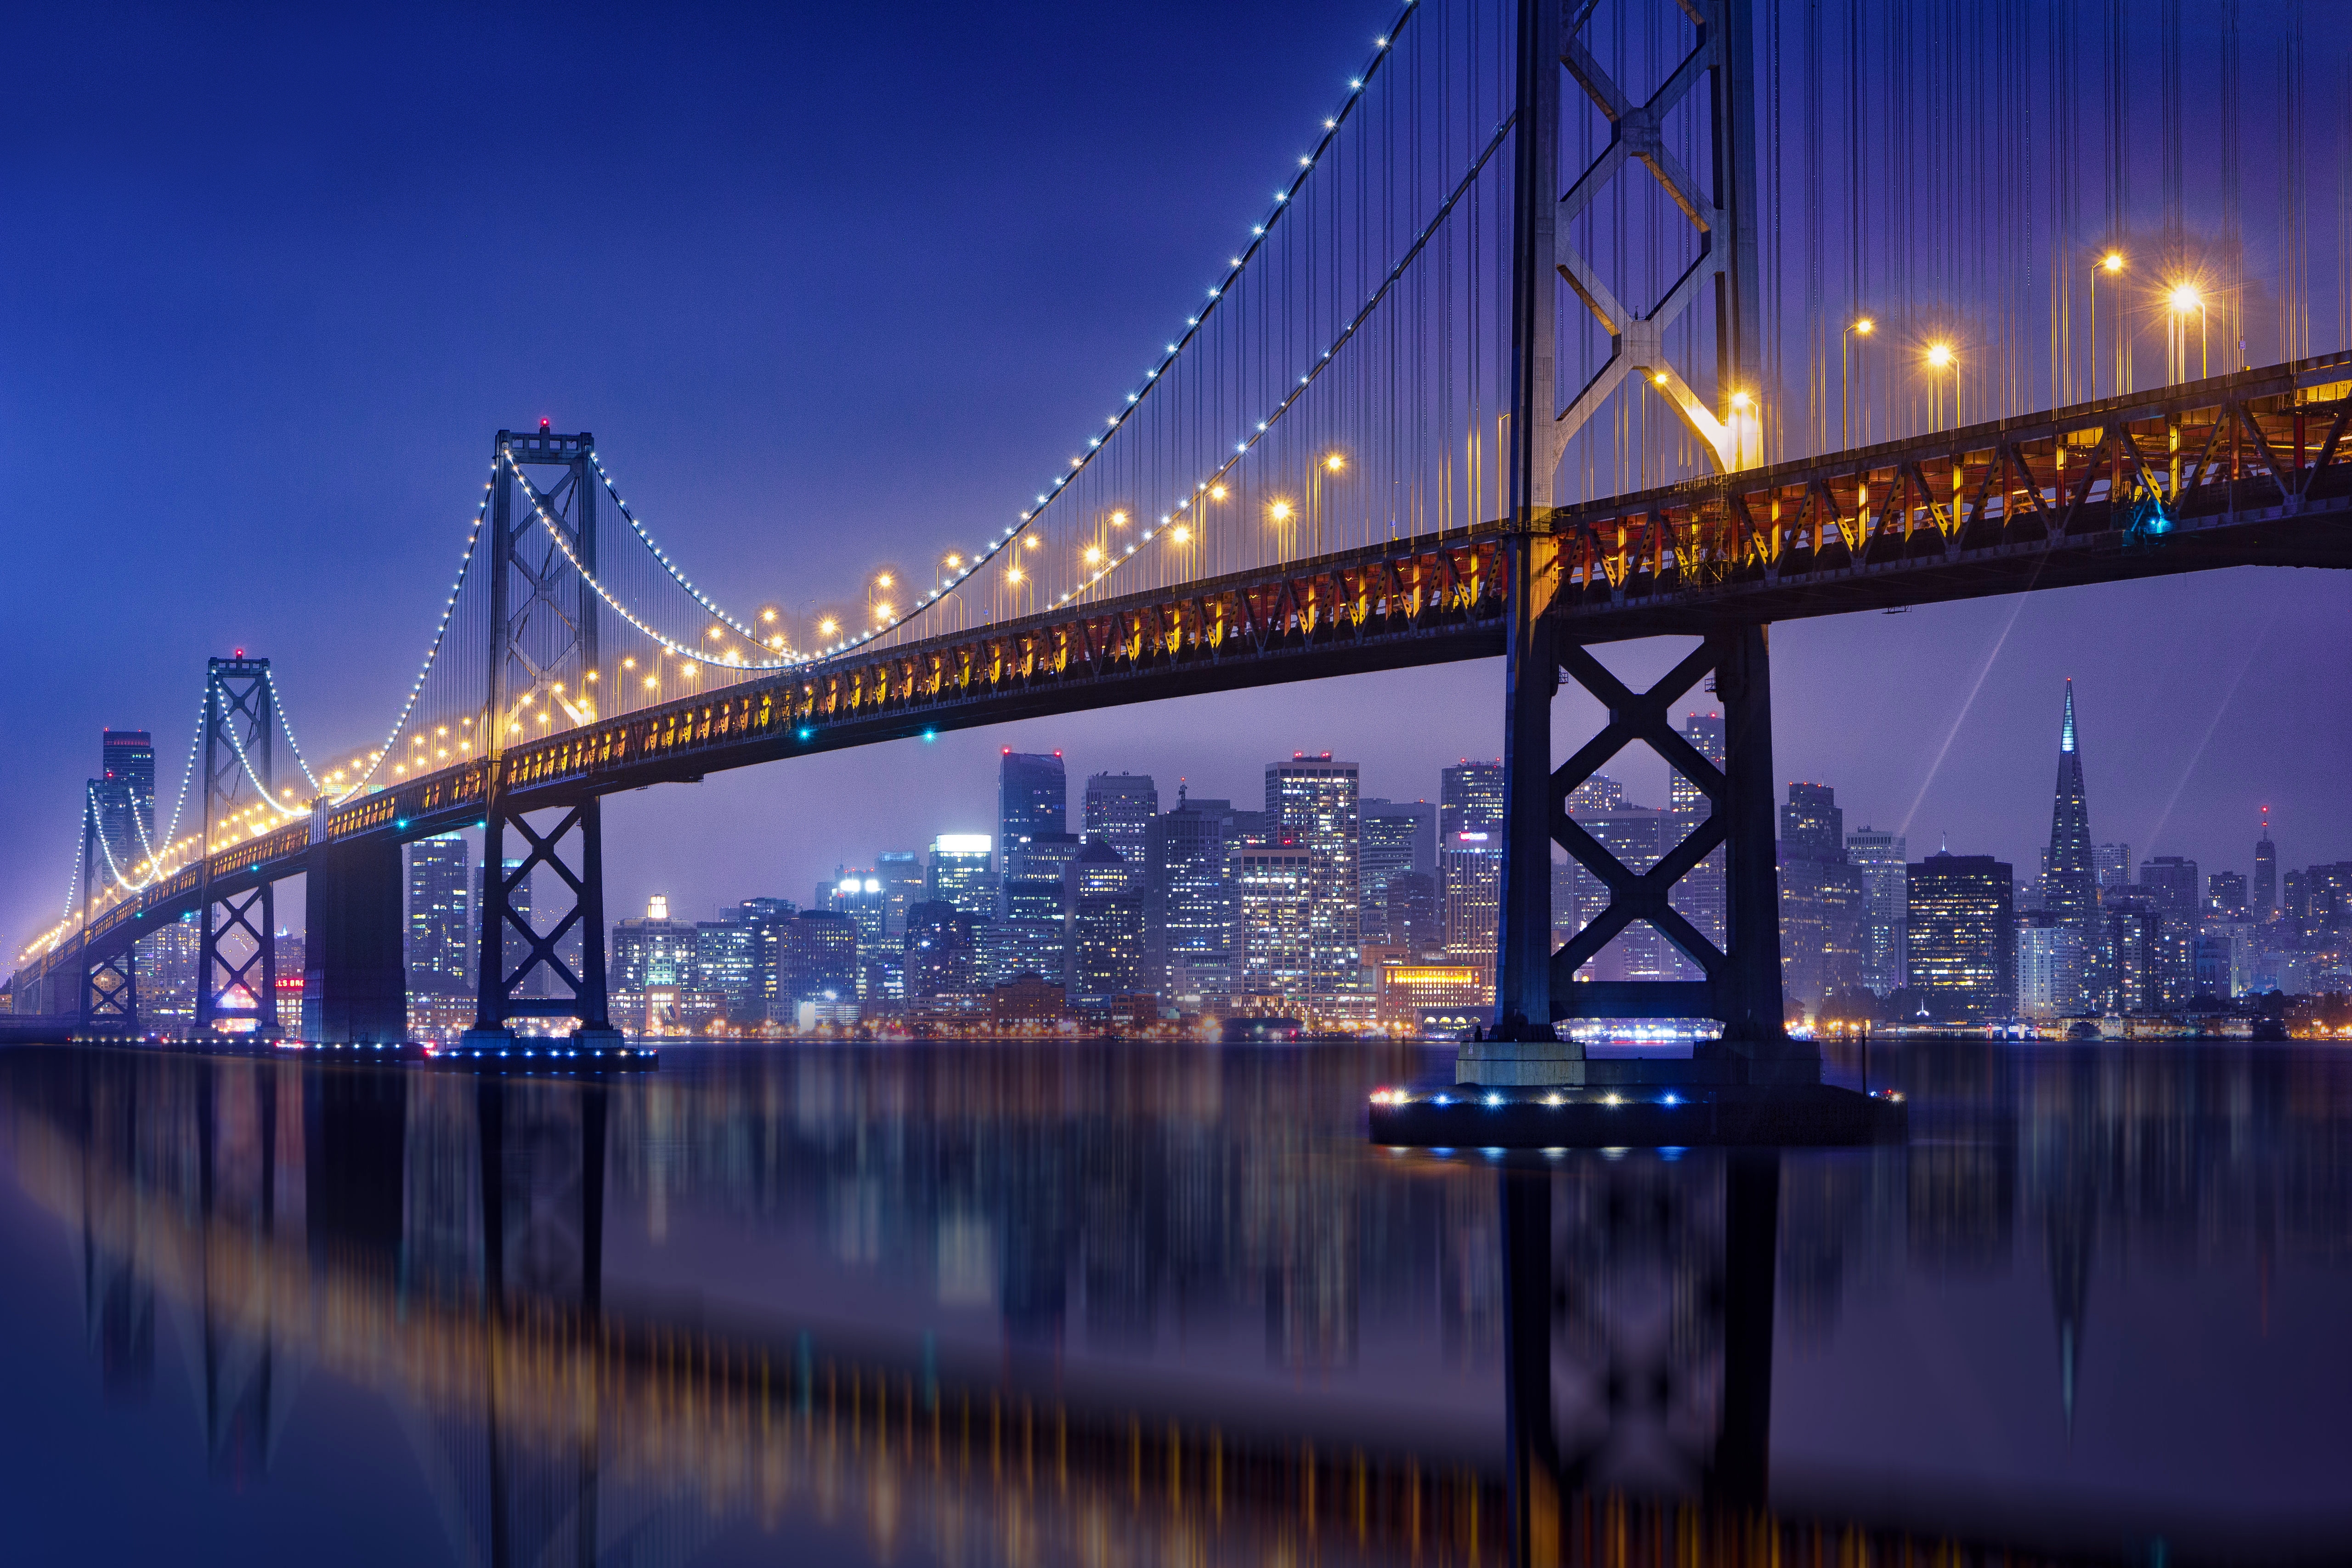 HD wallpaper, Urban, 5K, Bay Bridge, Night, San Francisco Oakland Bay Bridge, City Lights